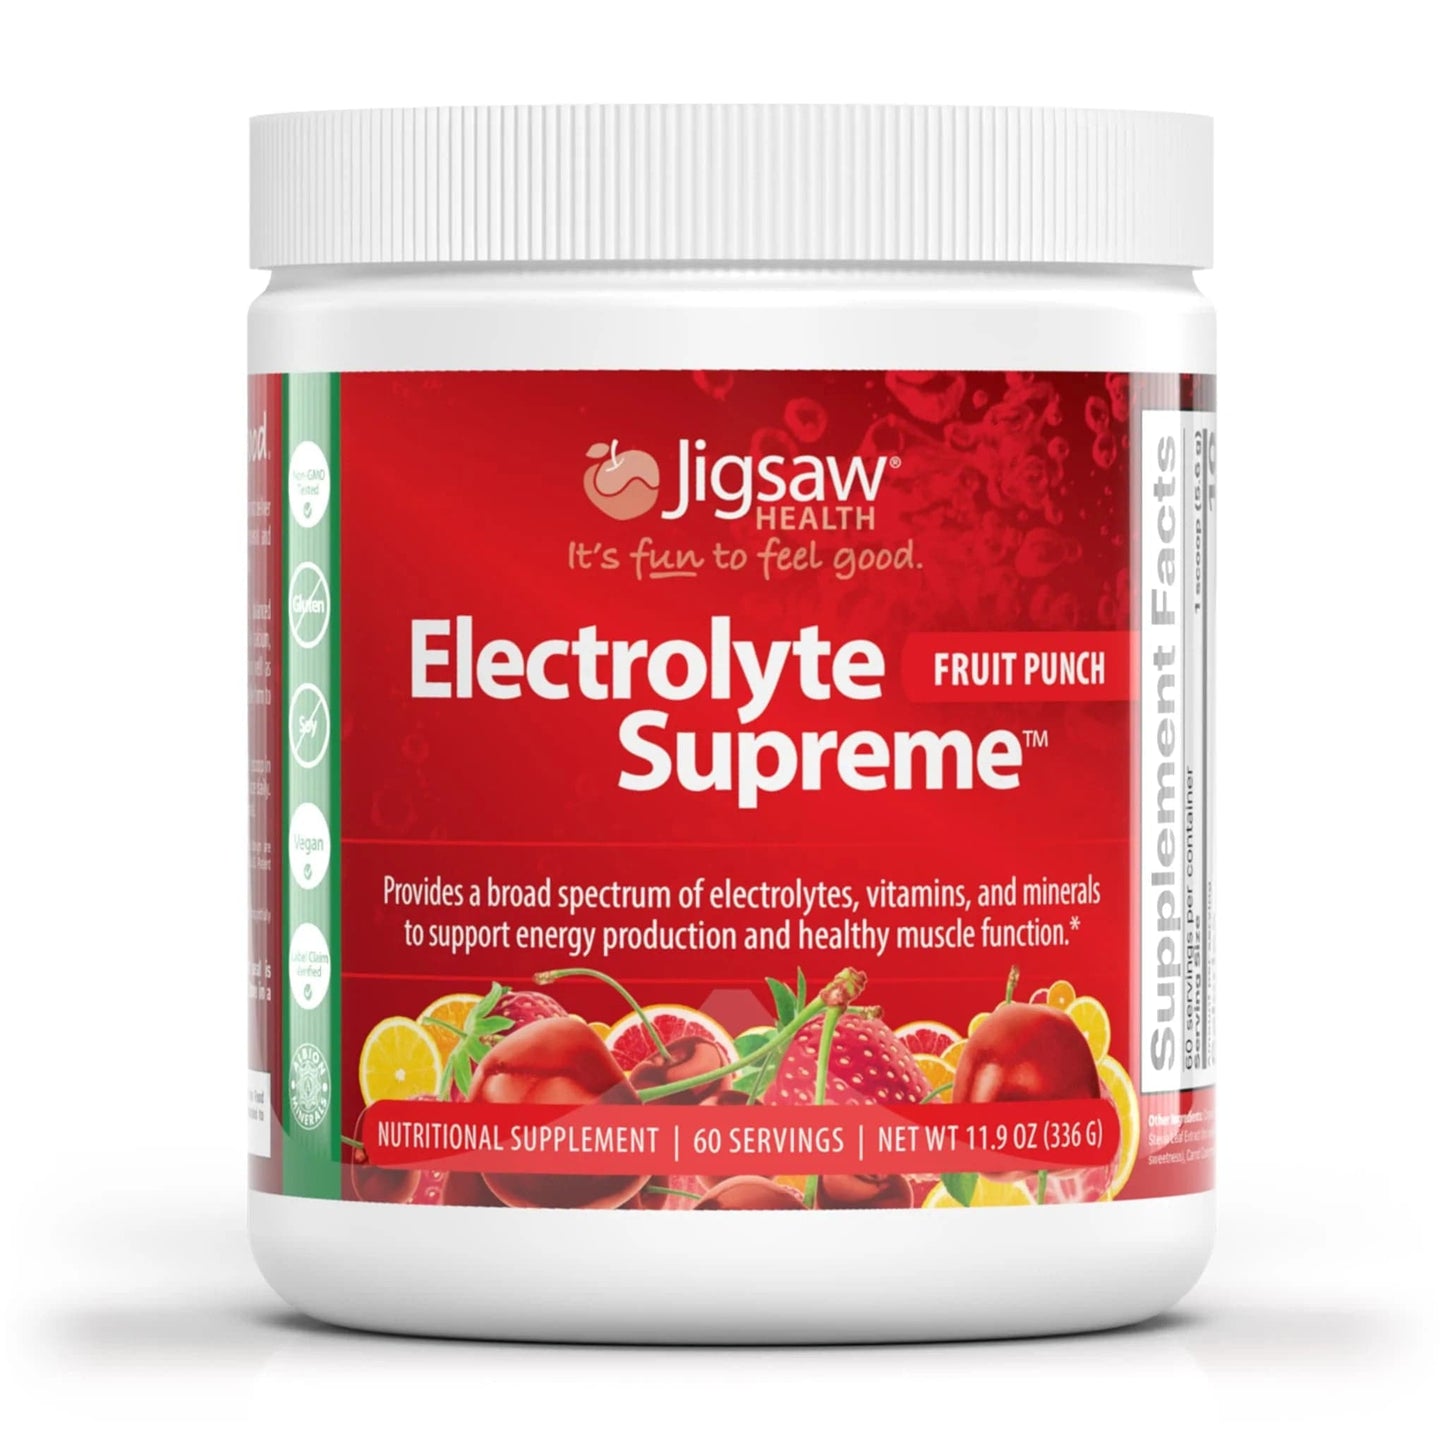 Jigsaw Electrolyte Supreme Fruit Punch